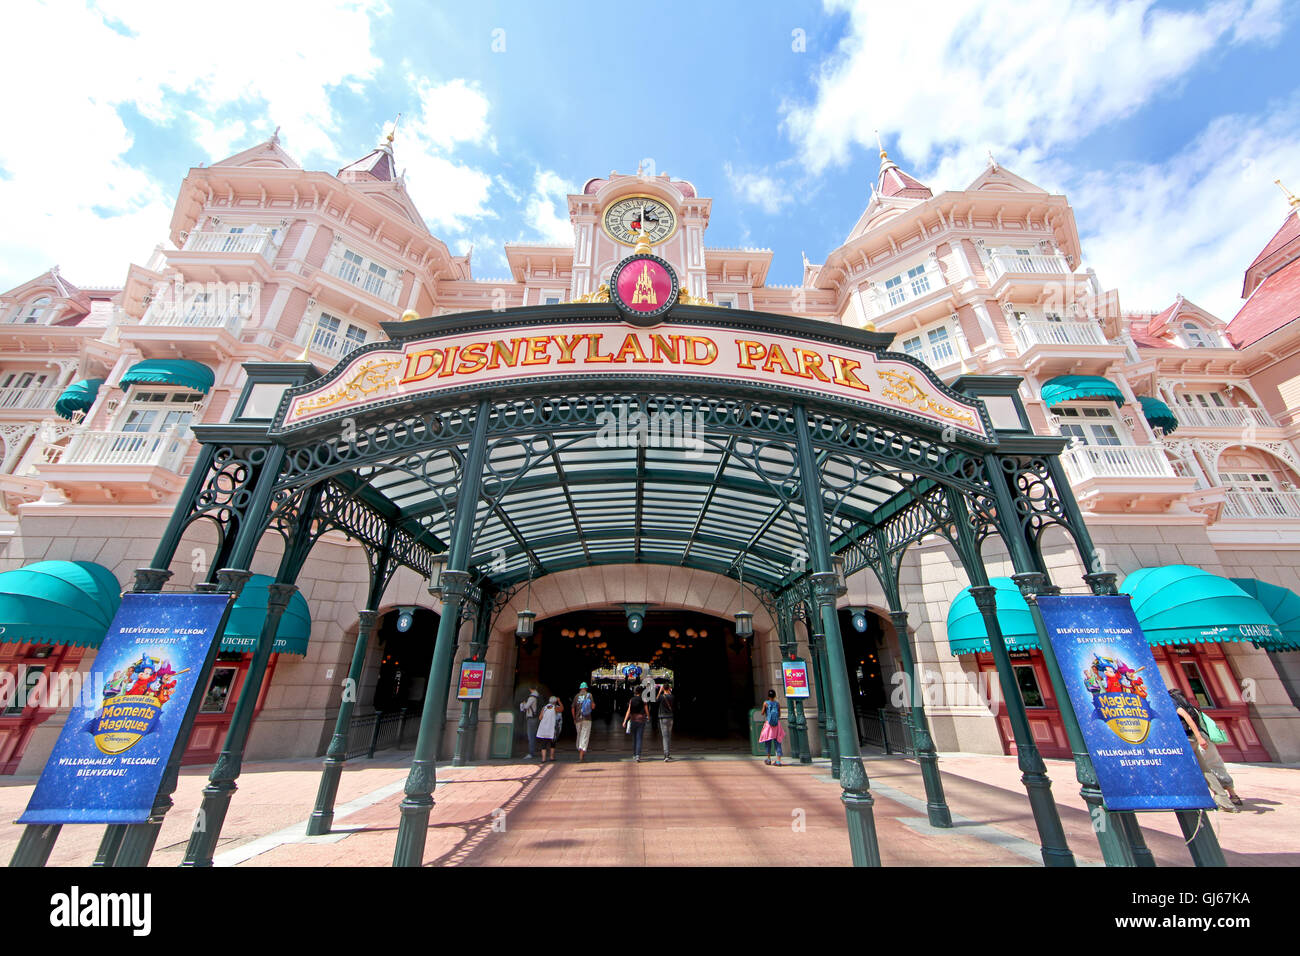 Marne La Vallee, France. June 26th, 2011. The Disneyland Hotel and Entrance to Disneyland Park at Disneyland Resort Paris. Stock Photo